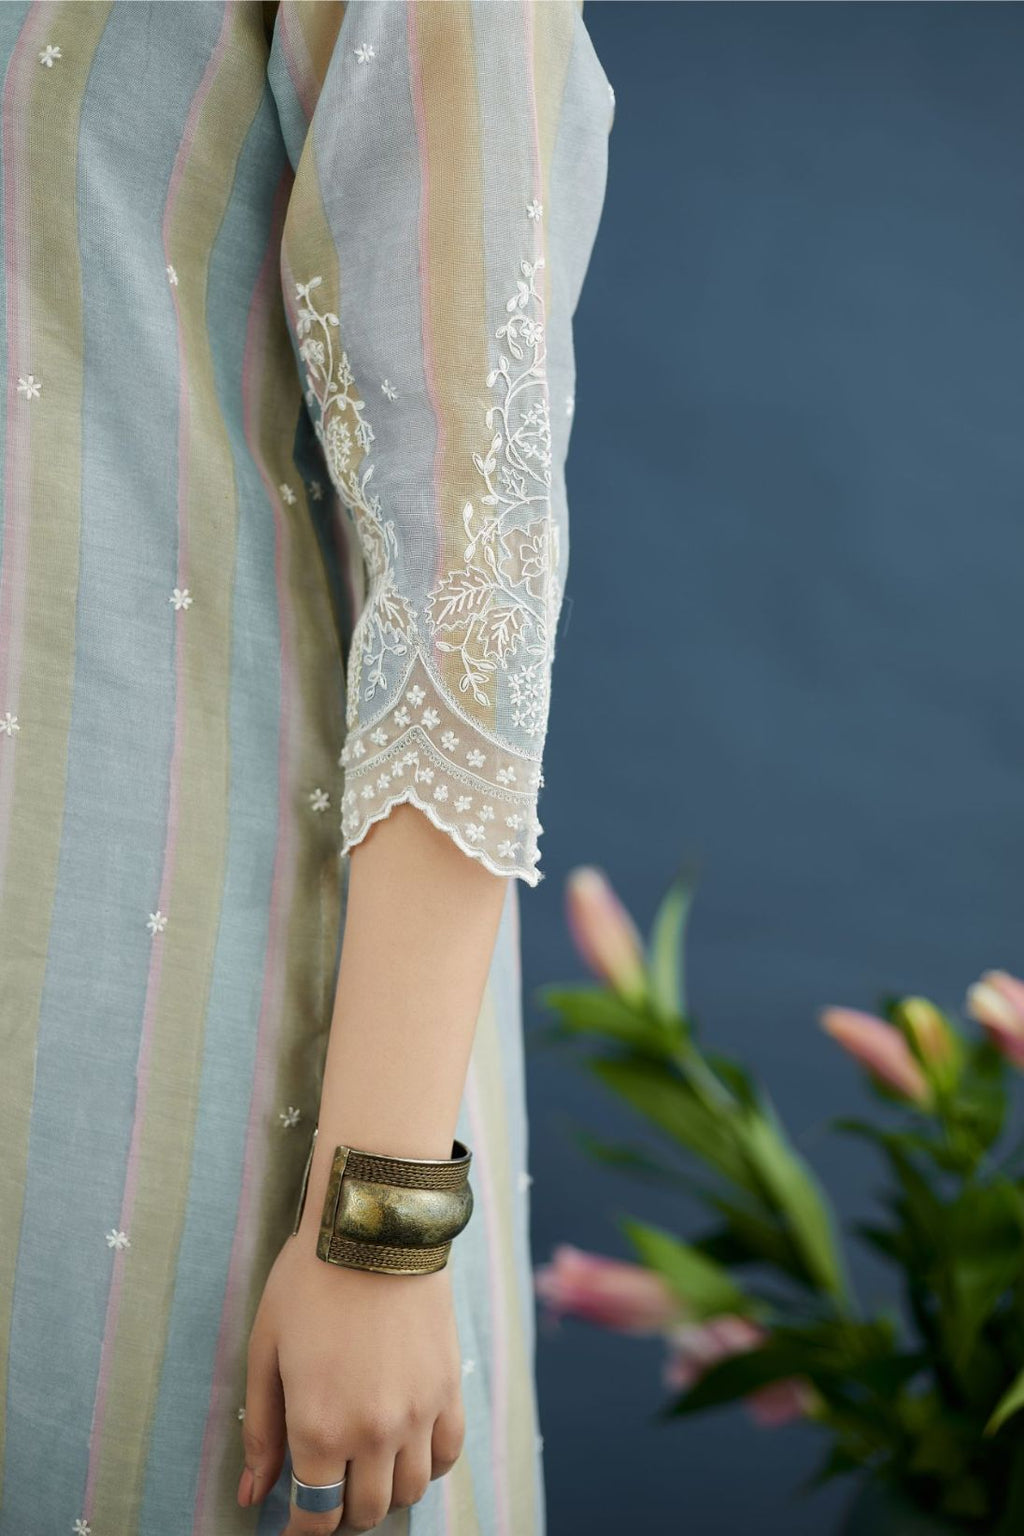 Blue and beige hand block printed silk chanderi kurta set with scalloped hem and embroidered neckline